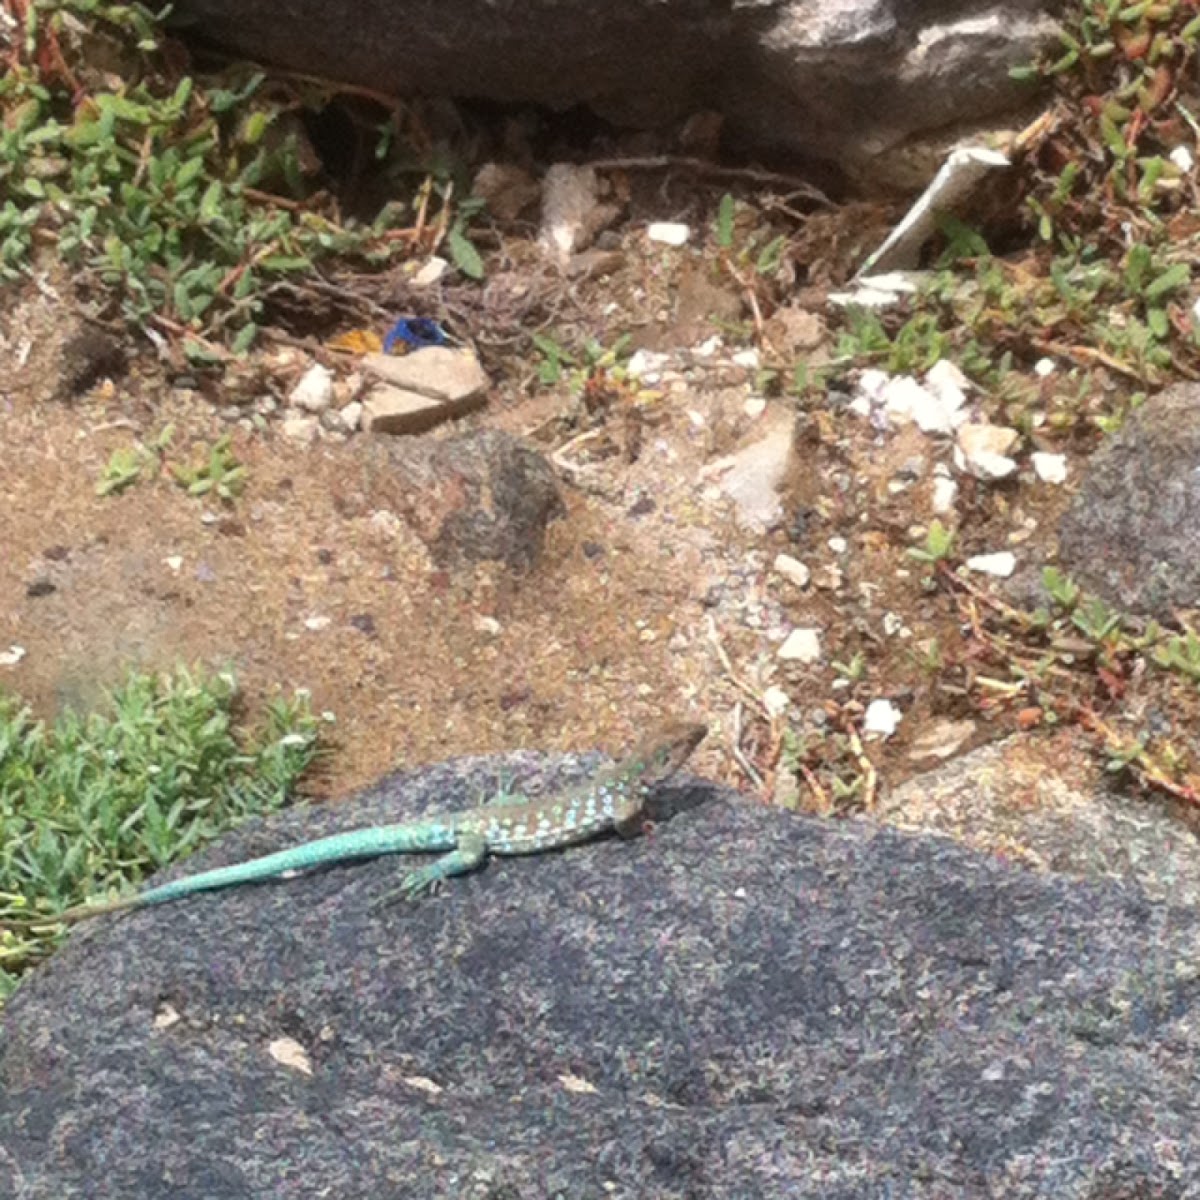 Aruban Whiptail Lizard